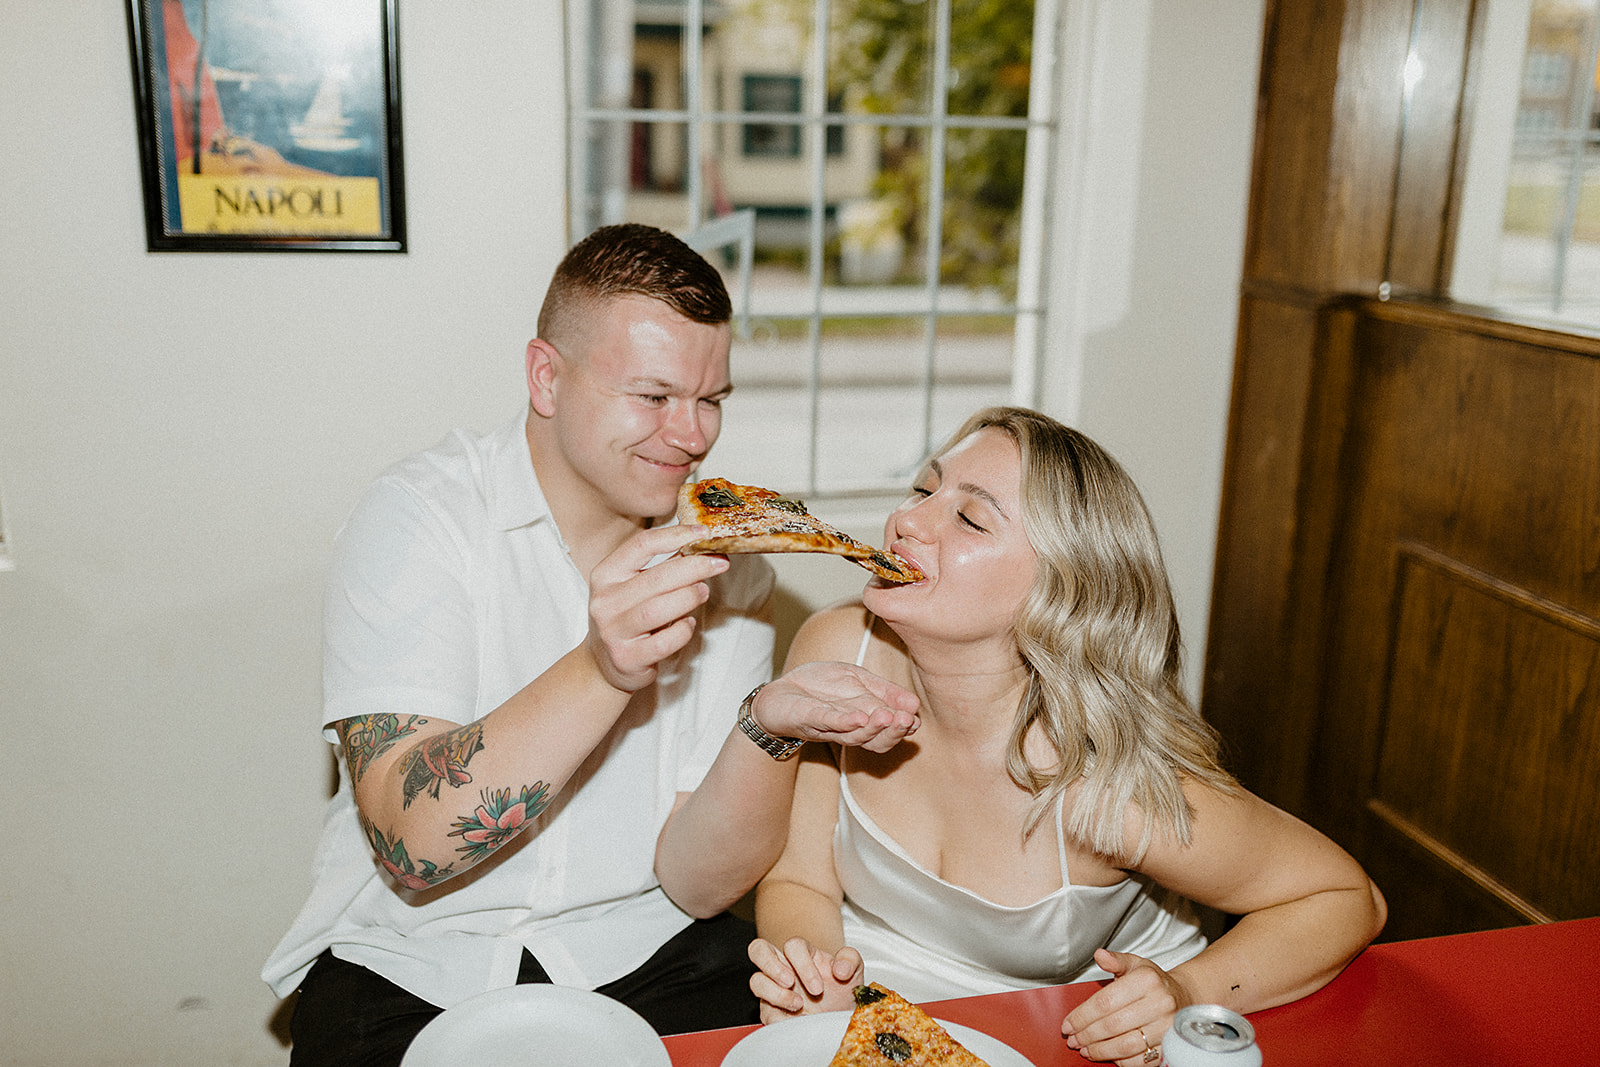 engagement photoshoot at pizza restaurant vintage bar film couples session ideas